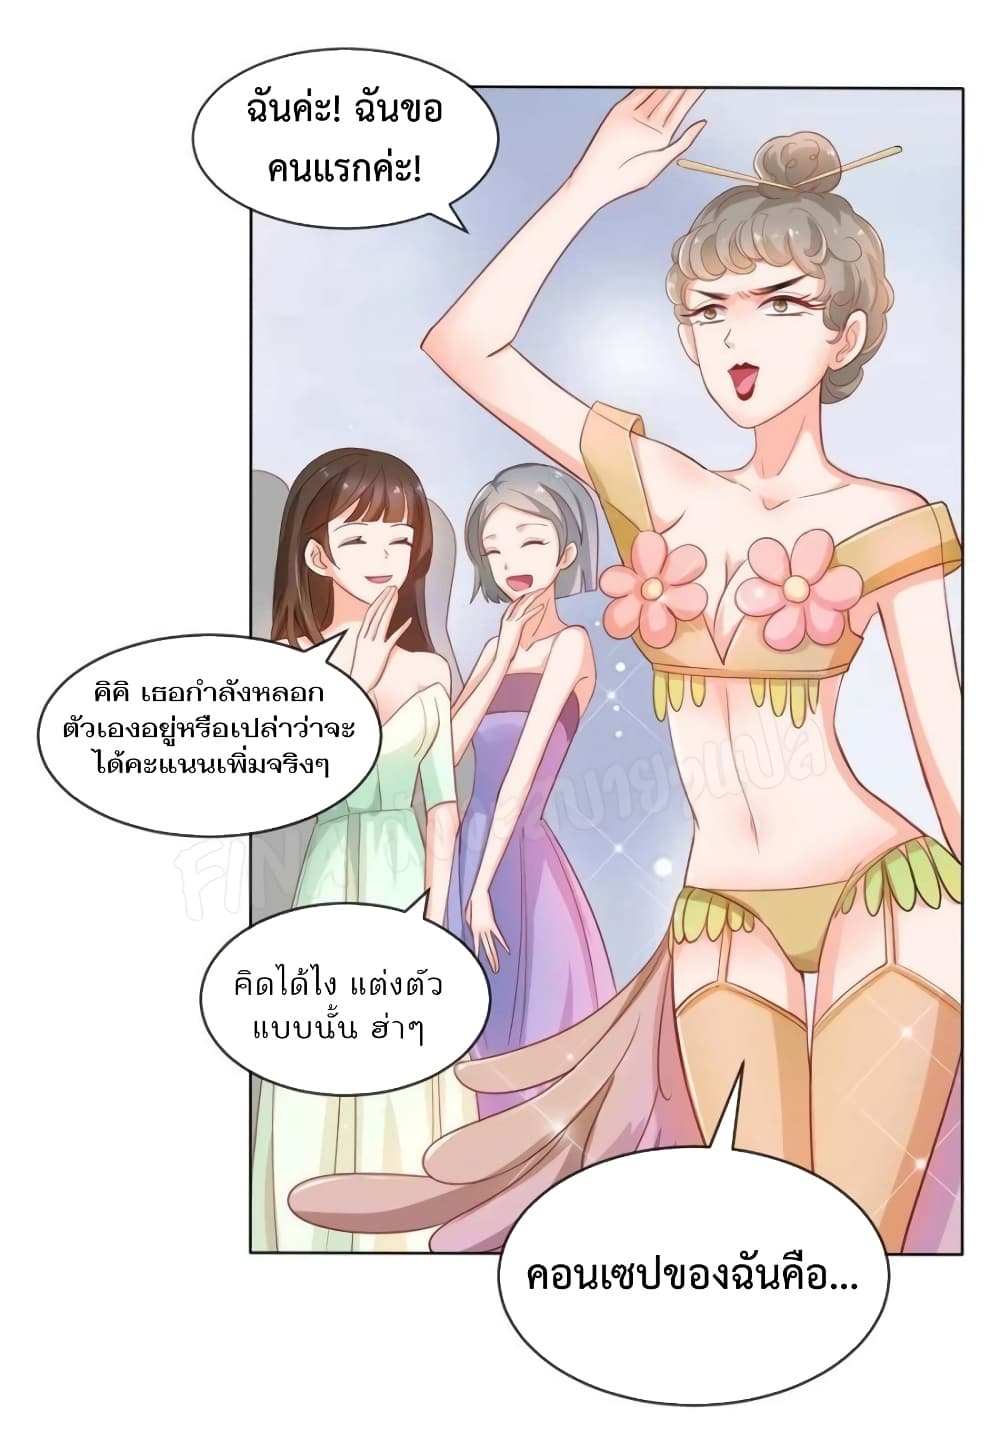 Prince Charming’s Lovely Gaze Comics 5 (16)